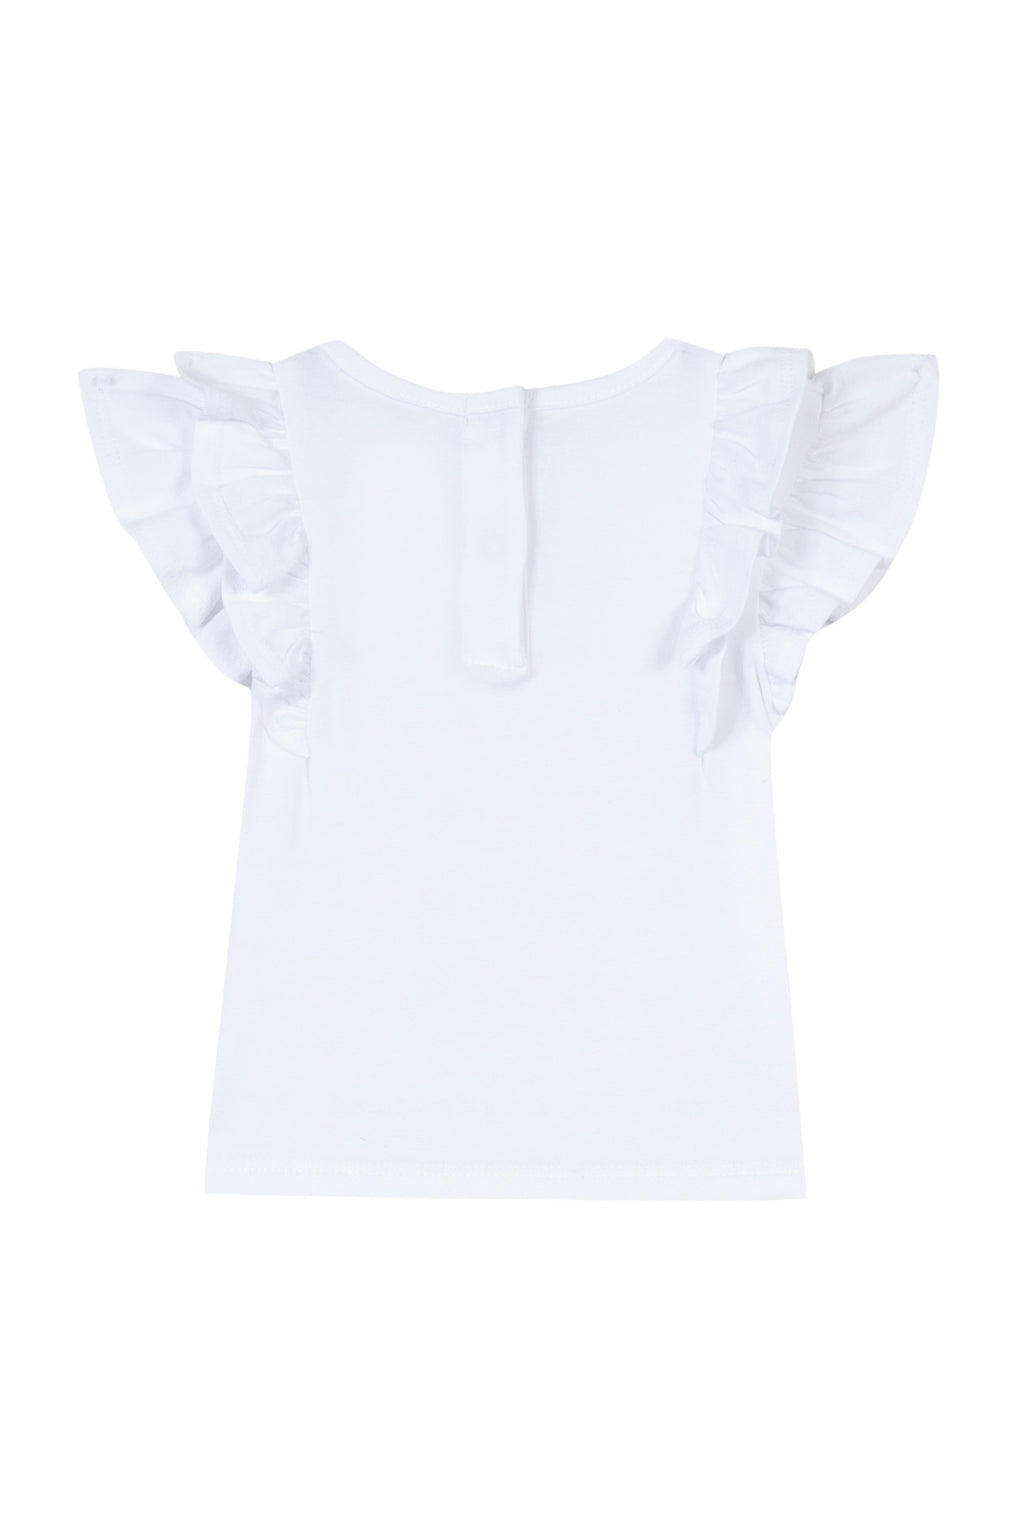 T-shirt - White Illustration fisheries